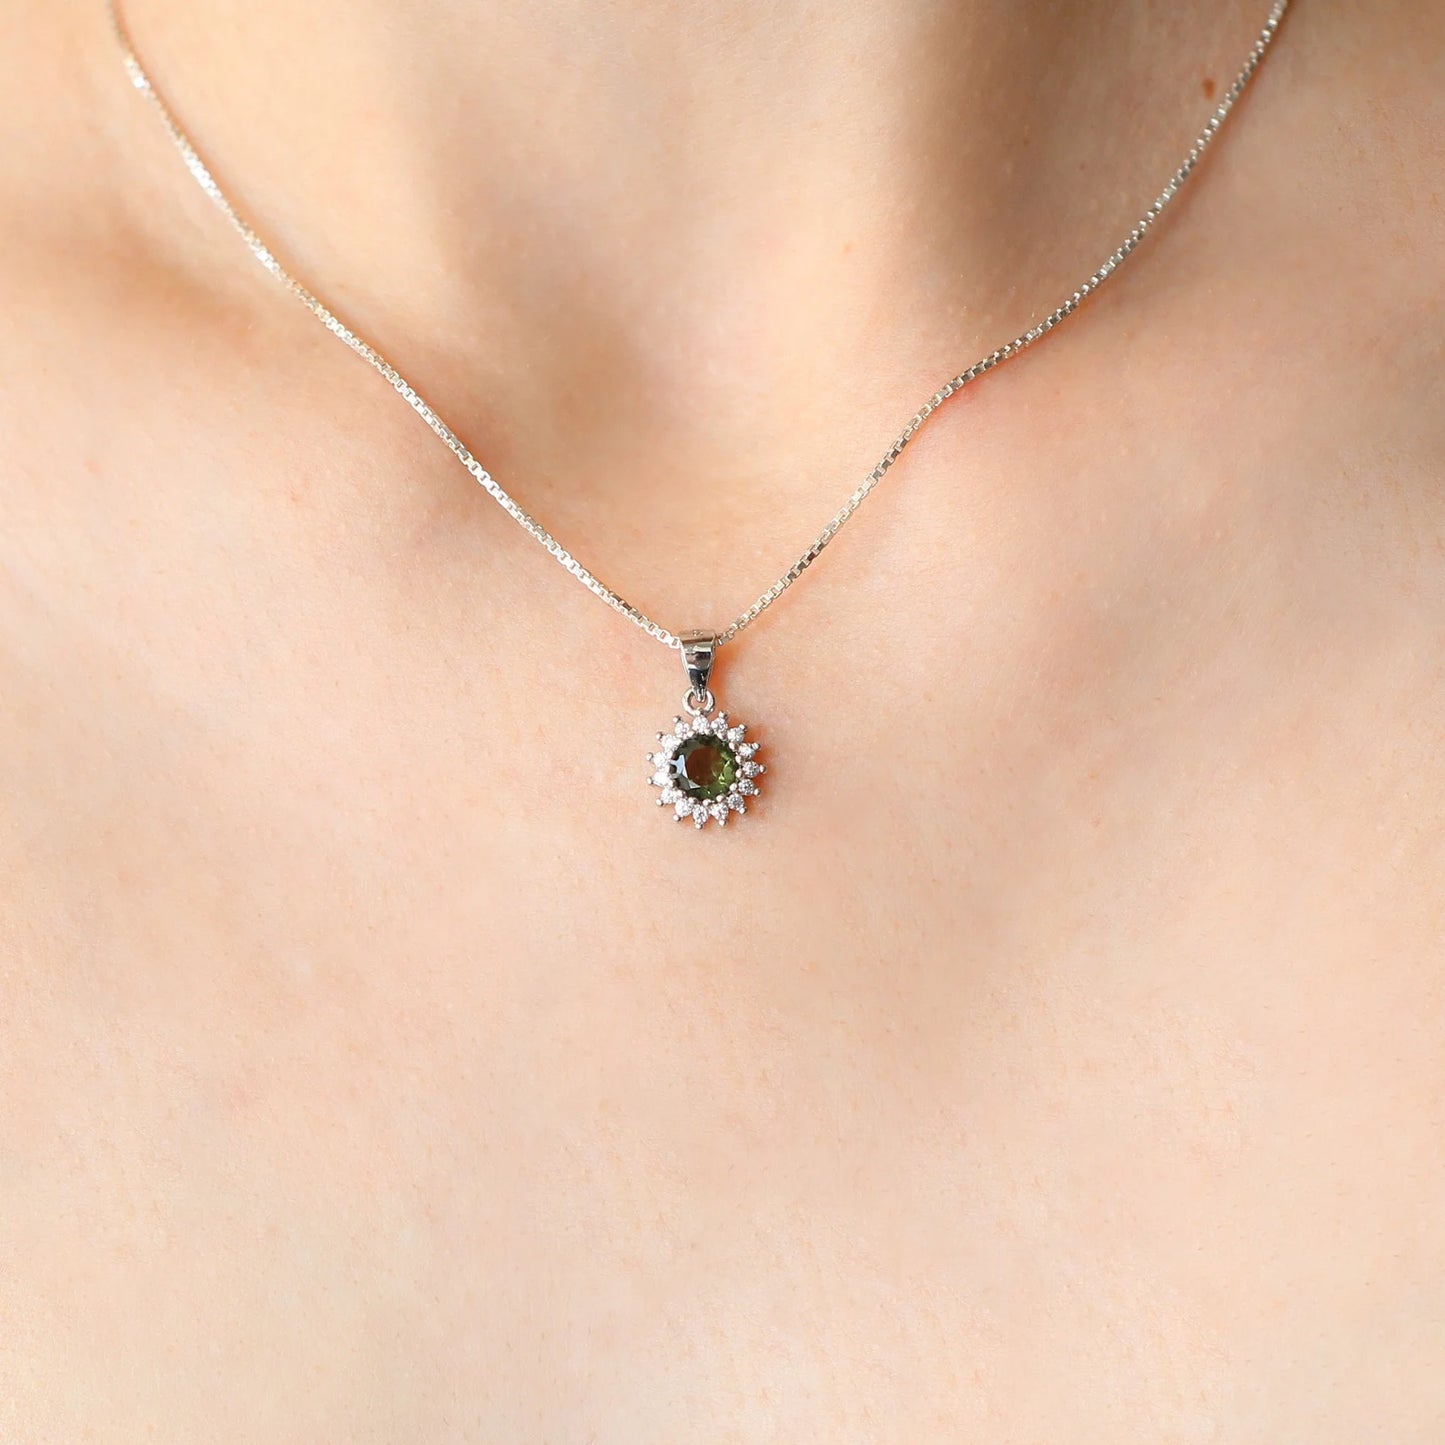 6mm stone real MOLDAVITE Pendant Sterling Silver Moldavite jewelry from Czech Republic genuine moldavite pendant necklace with certificate